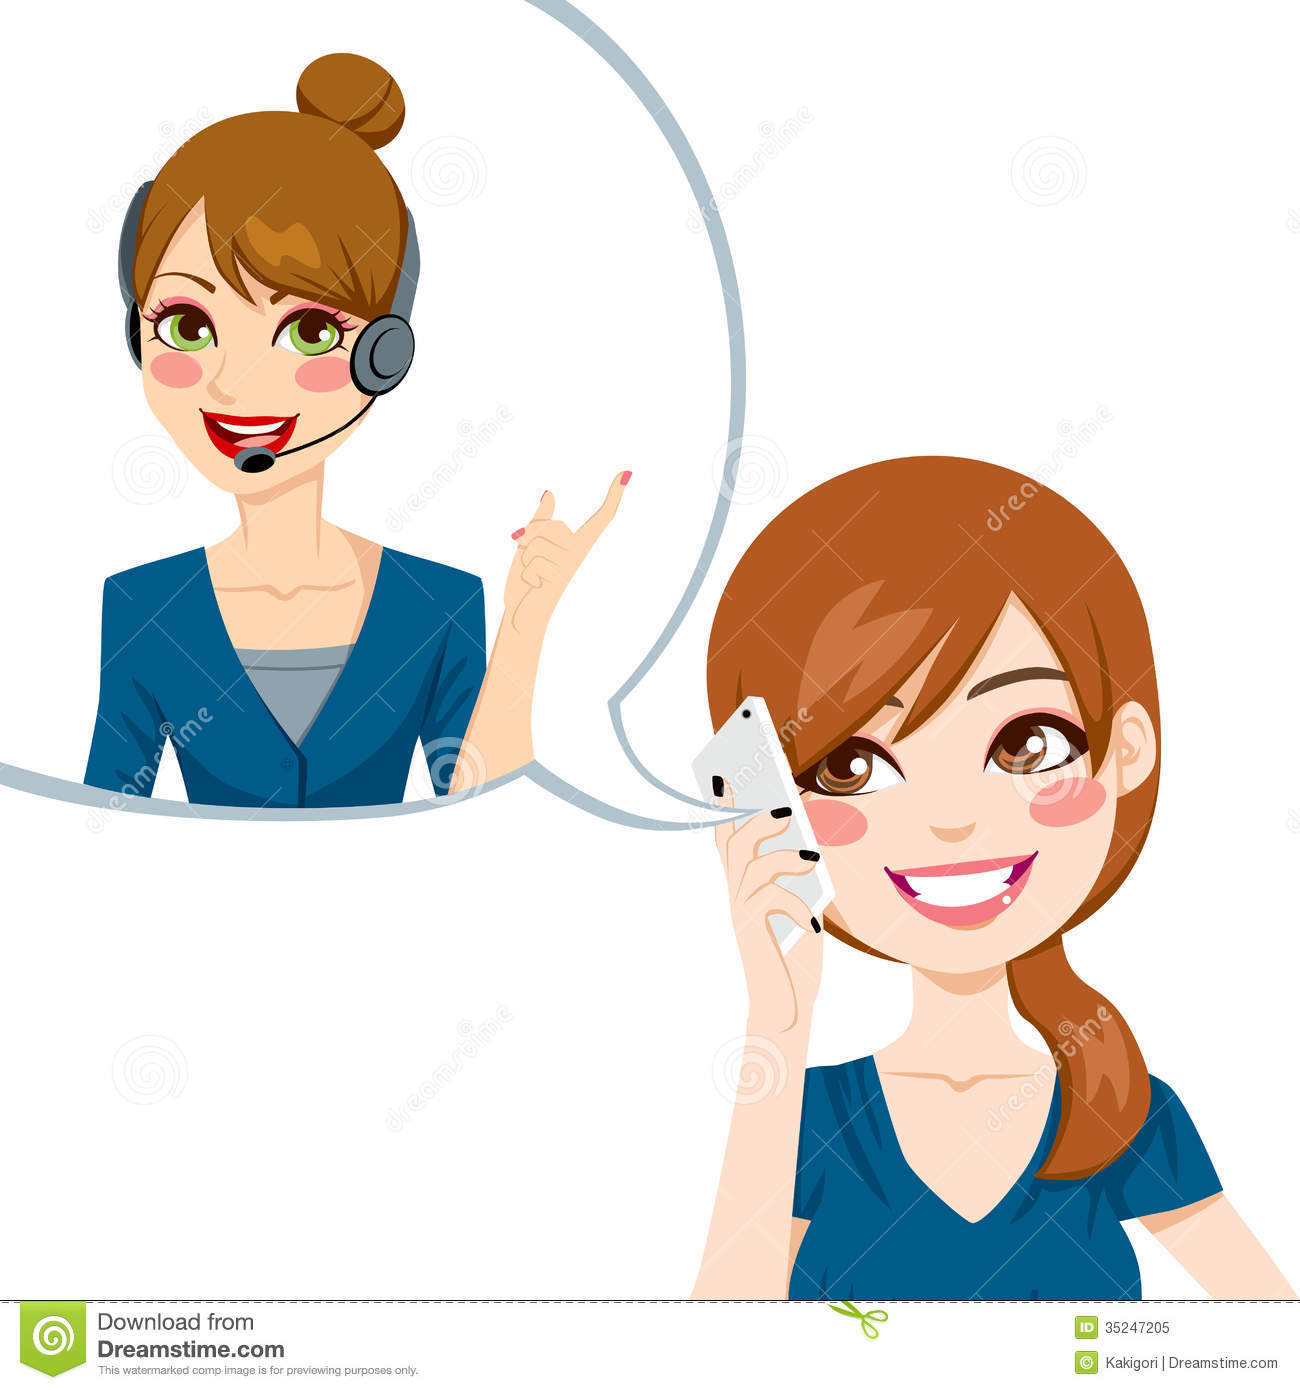 Conversation Receiving Good Customer Service From Call Center Agent